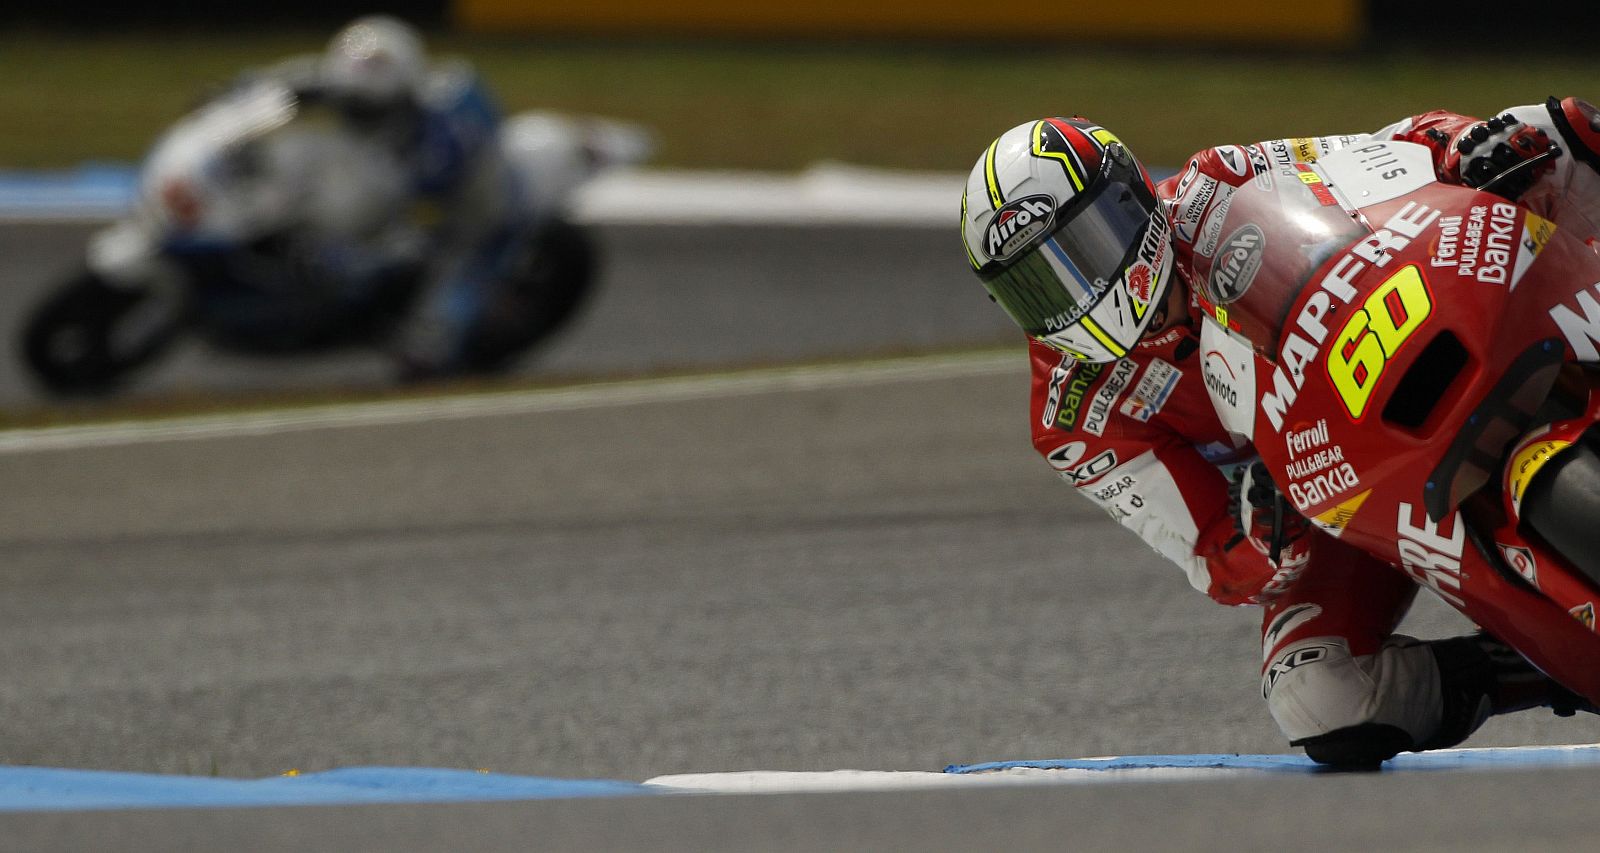 Suter Moto2 rider Simon takes a curve during a free practice session at the Portuguese Grand Prix in Estoril